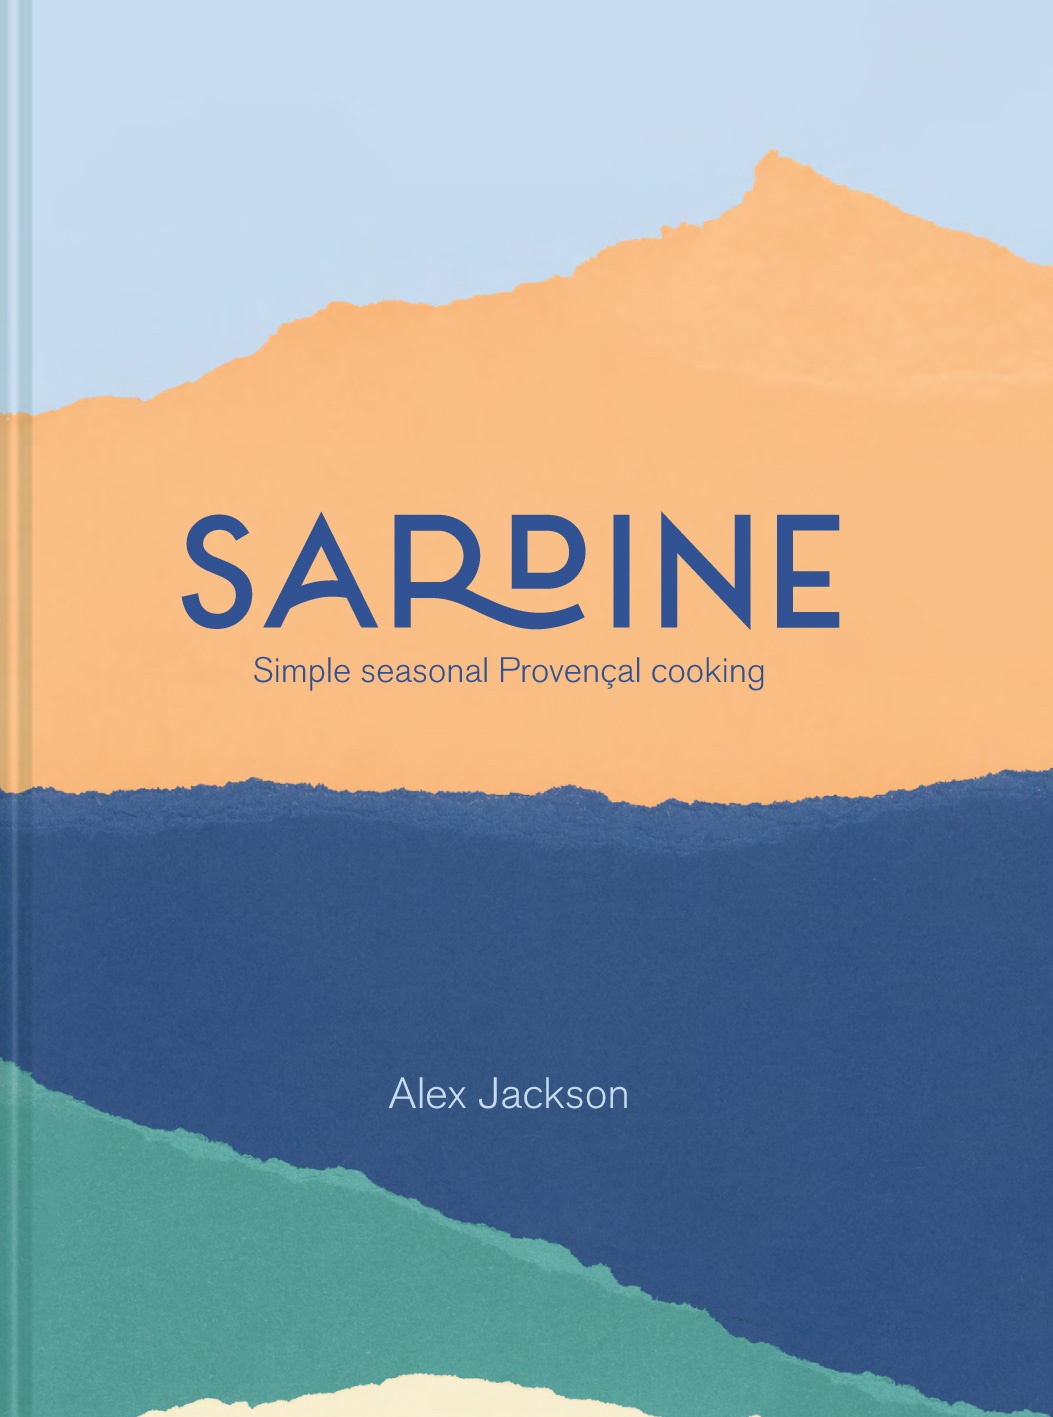 Book cover of Sardine by Alex Jackson